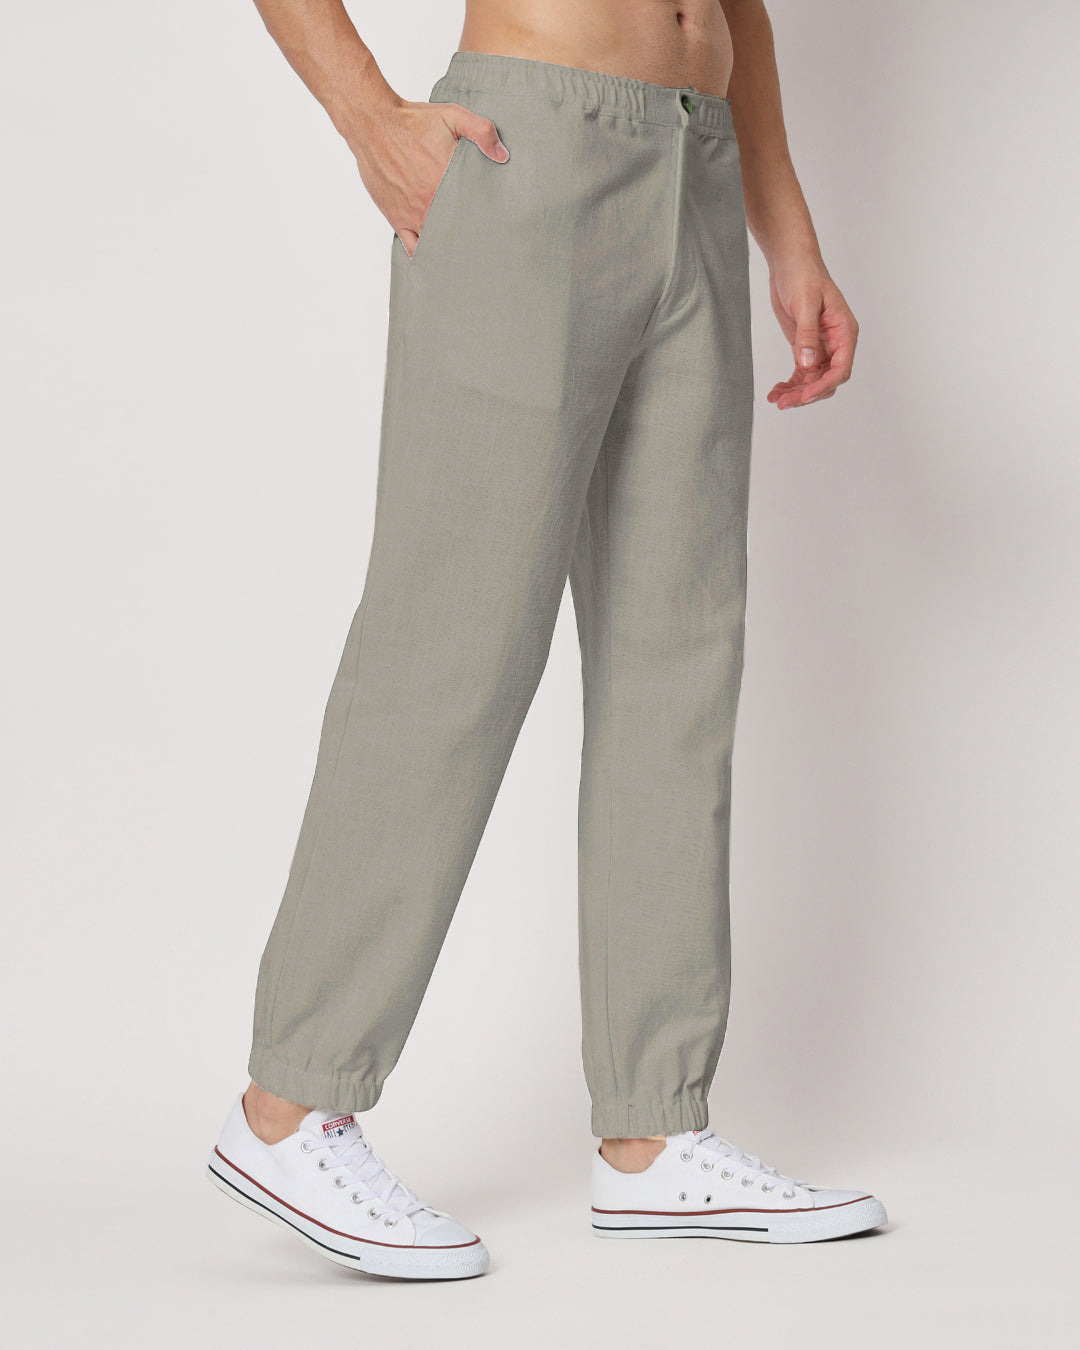 Combo: Olive Green & Grey Jog Men's Pants - Set of 2